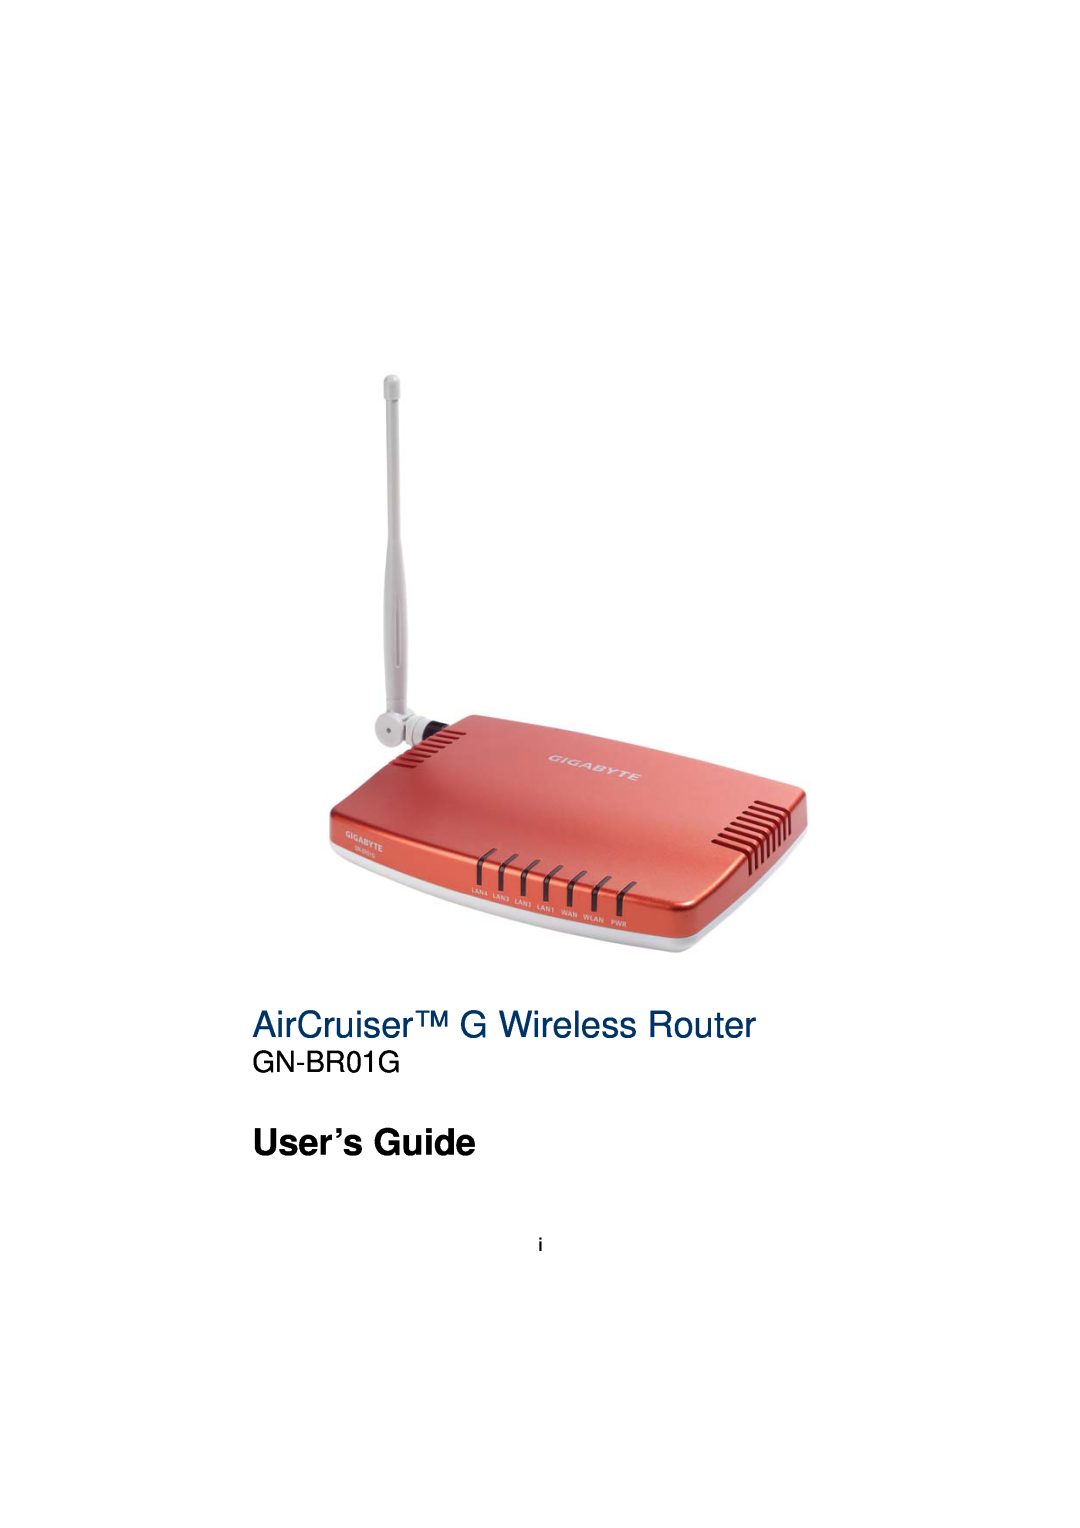 Gigabyte GN-BR01G manual AirCruiser G Wireless Router, User’s Guide 